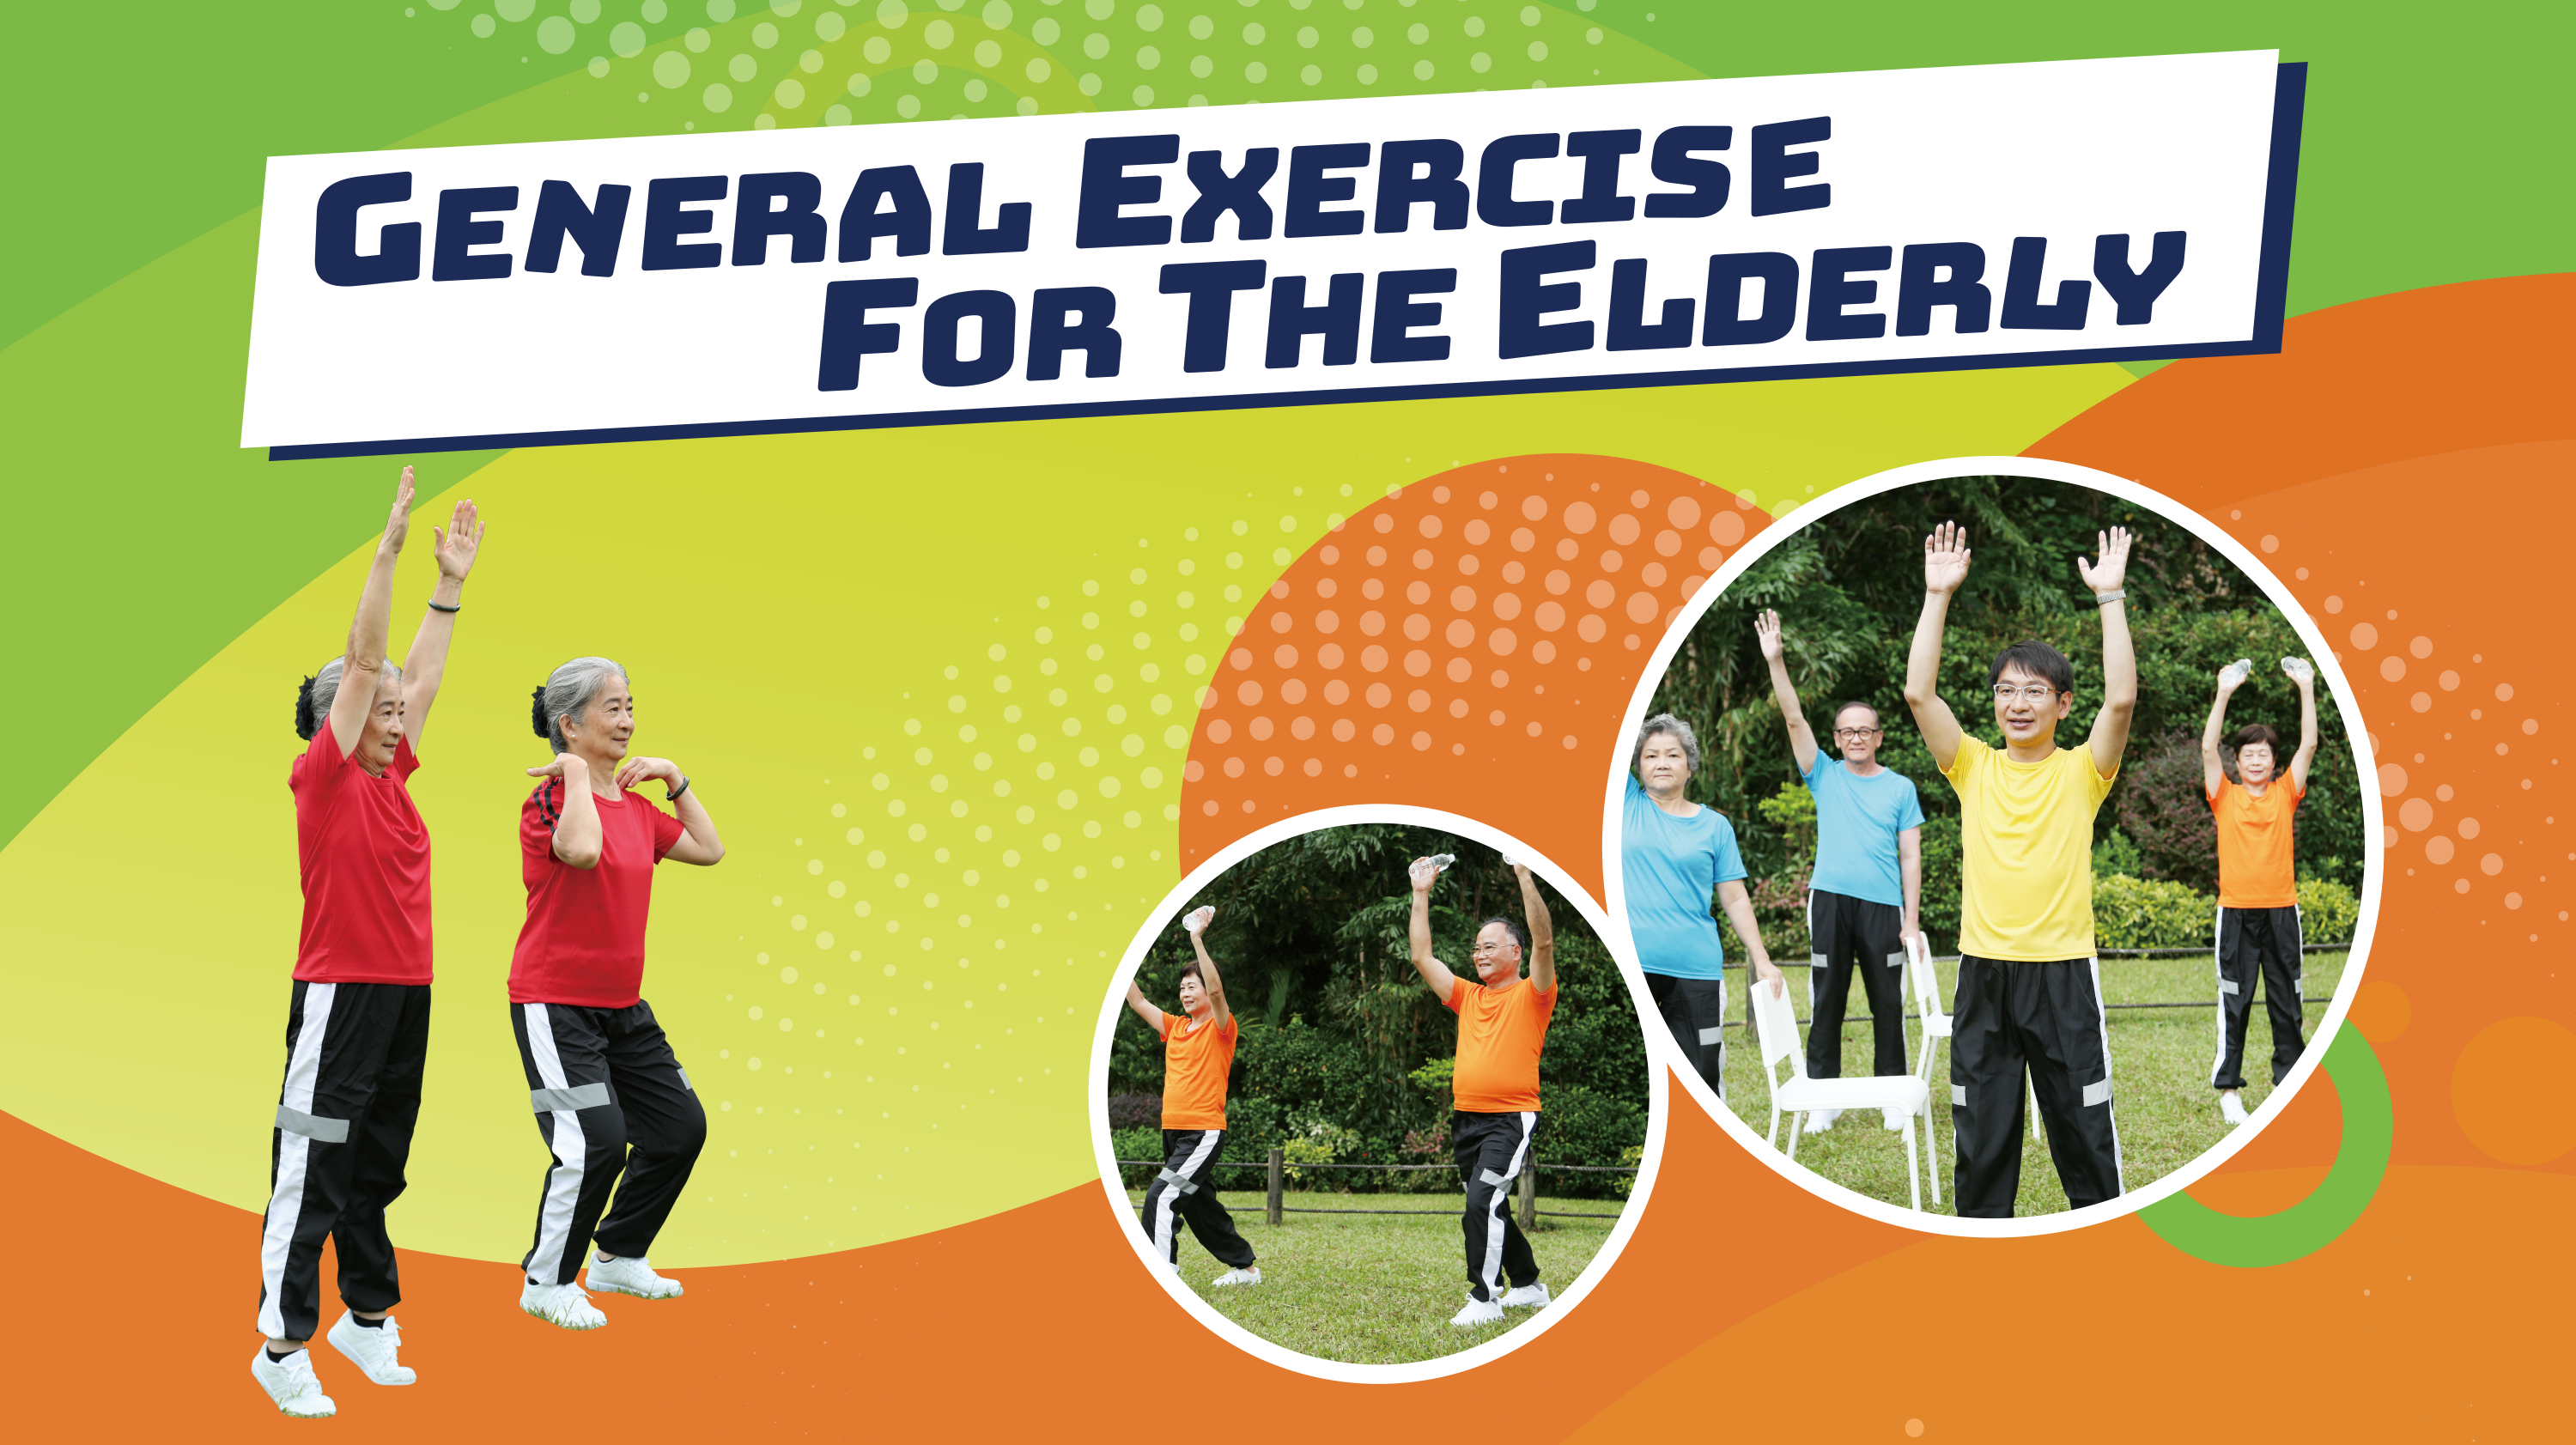 General Exercise For the Elderly